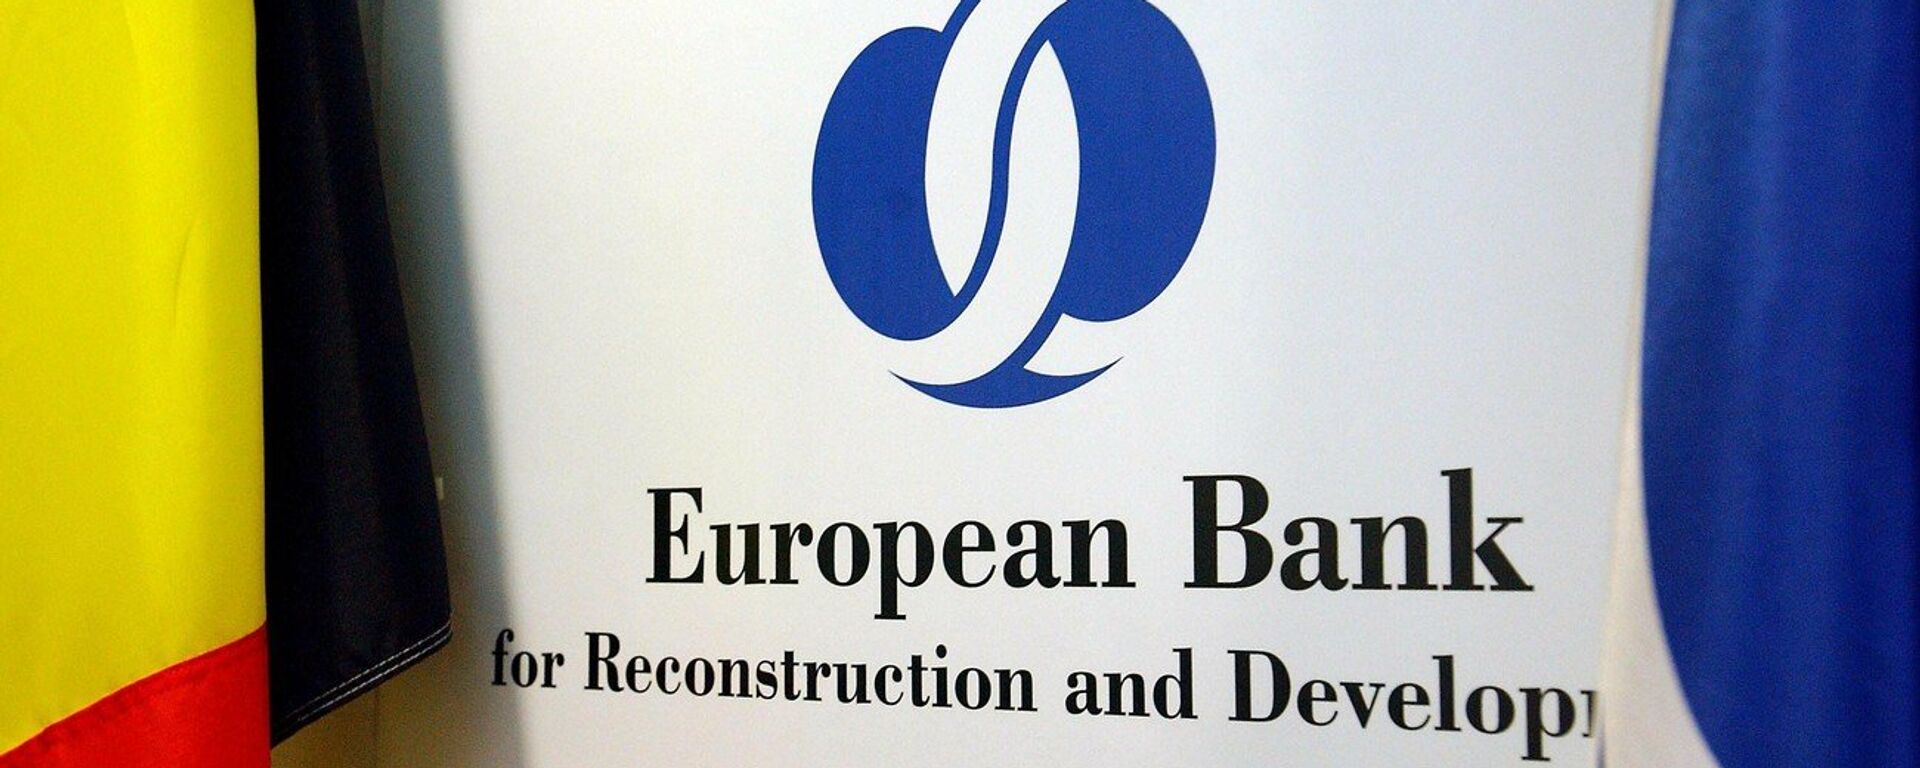 European Bank for Reconstruction and Development - Sputnik Узбекистан, 1920, 16.09.2020